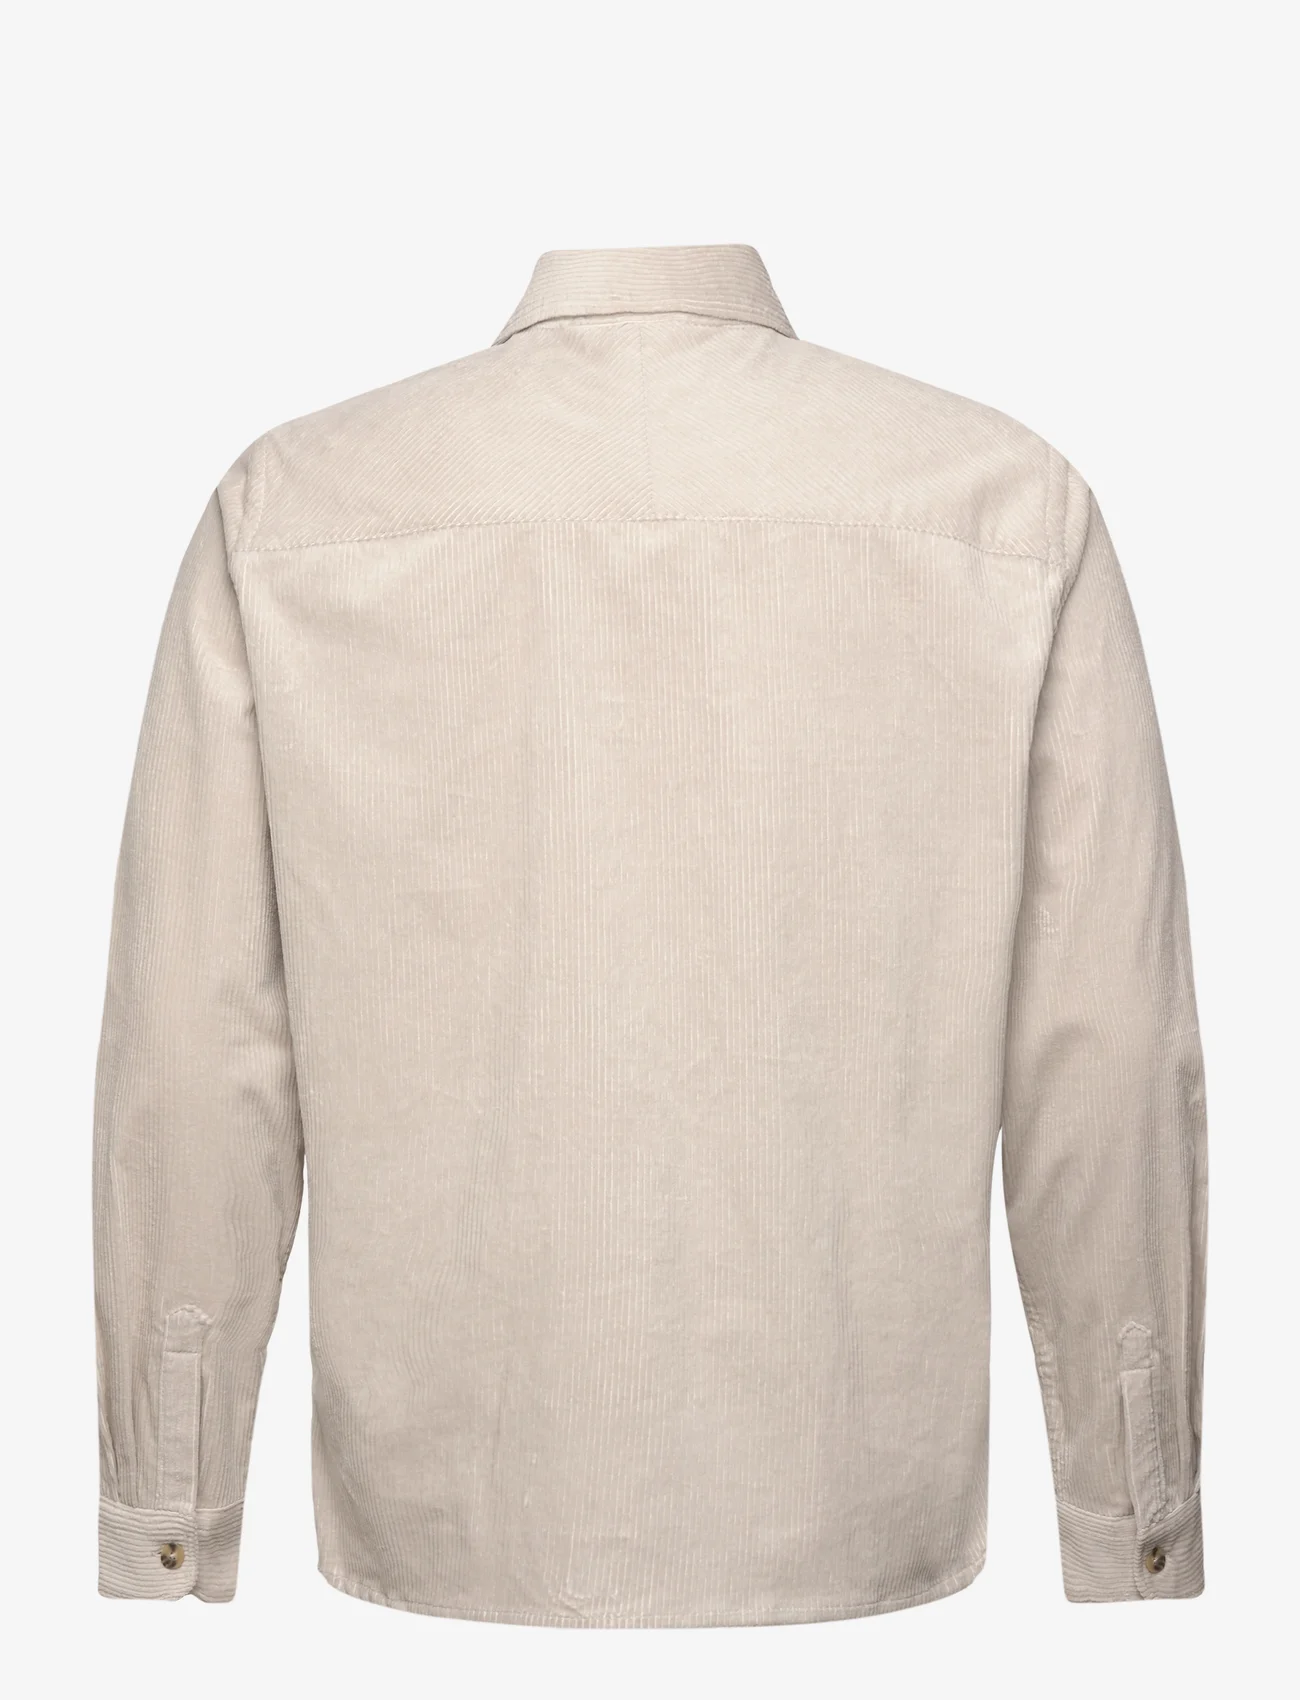 Mango - Corduroy pockets overshirt - mænd - natural white - 1